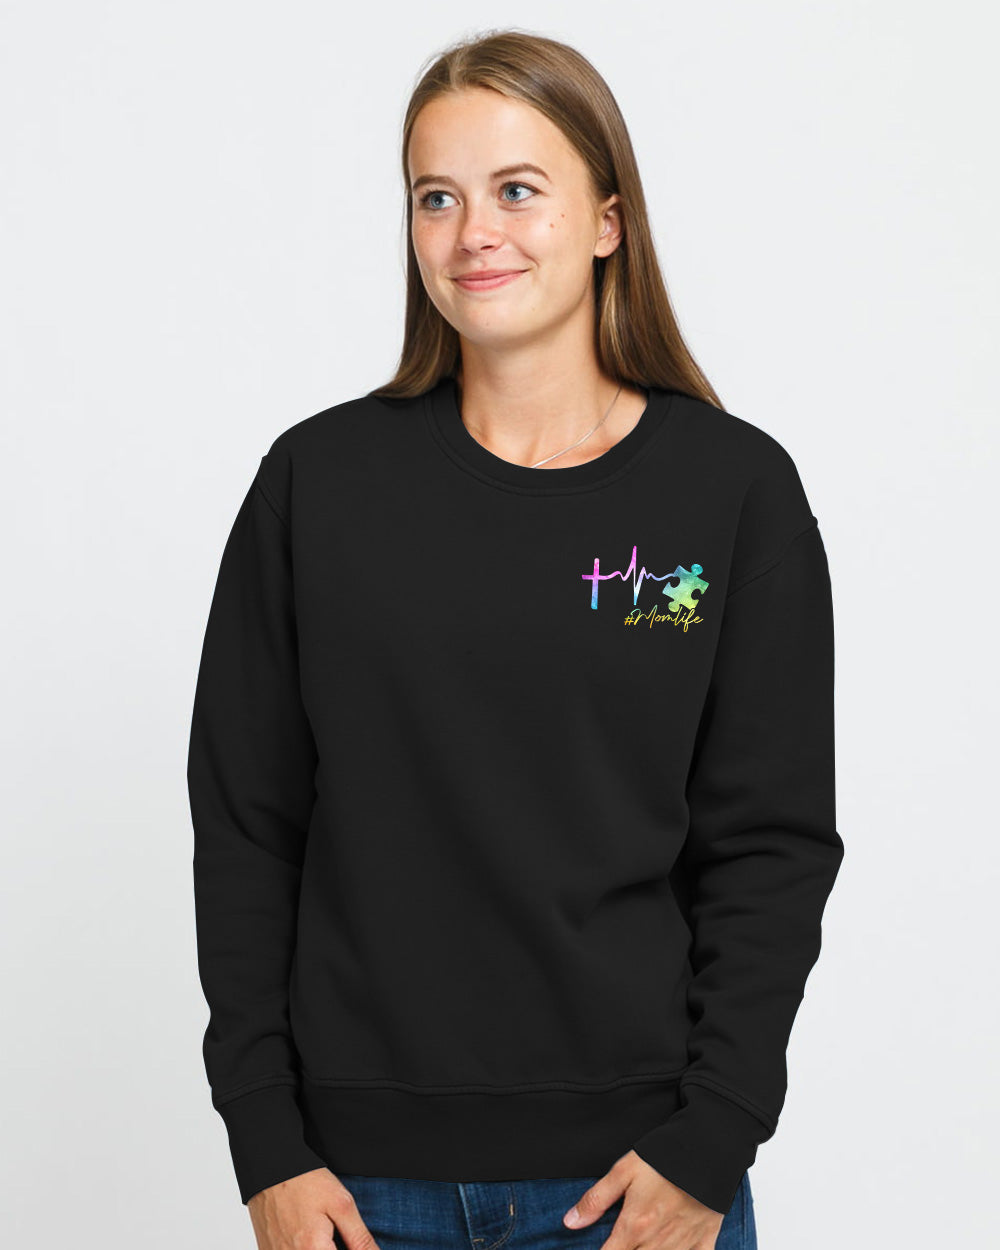 Different Is Beautiful Rainbow Sunflower Women's Autism Awareness Sweatshirt